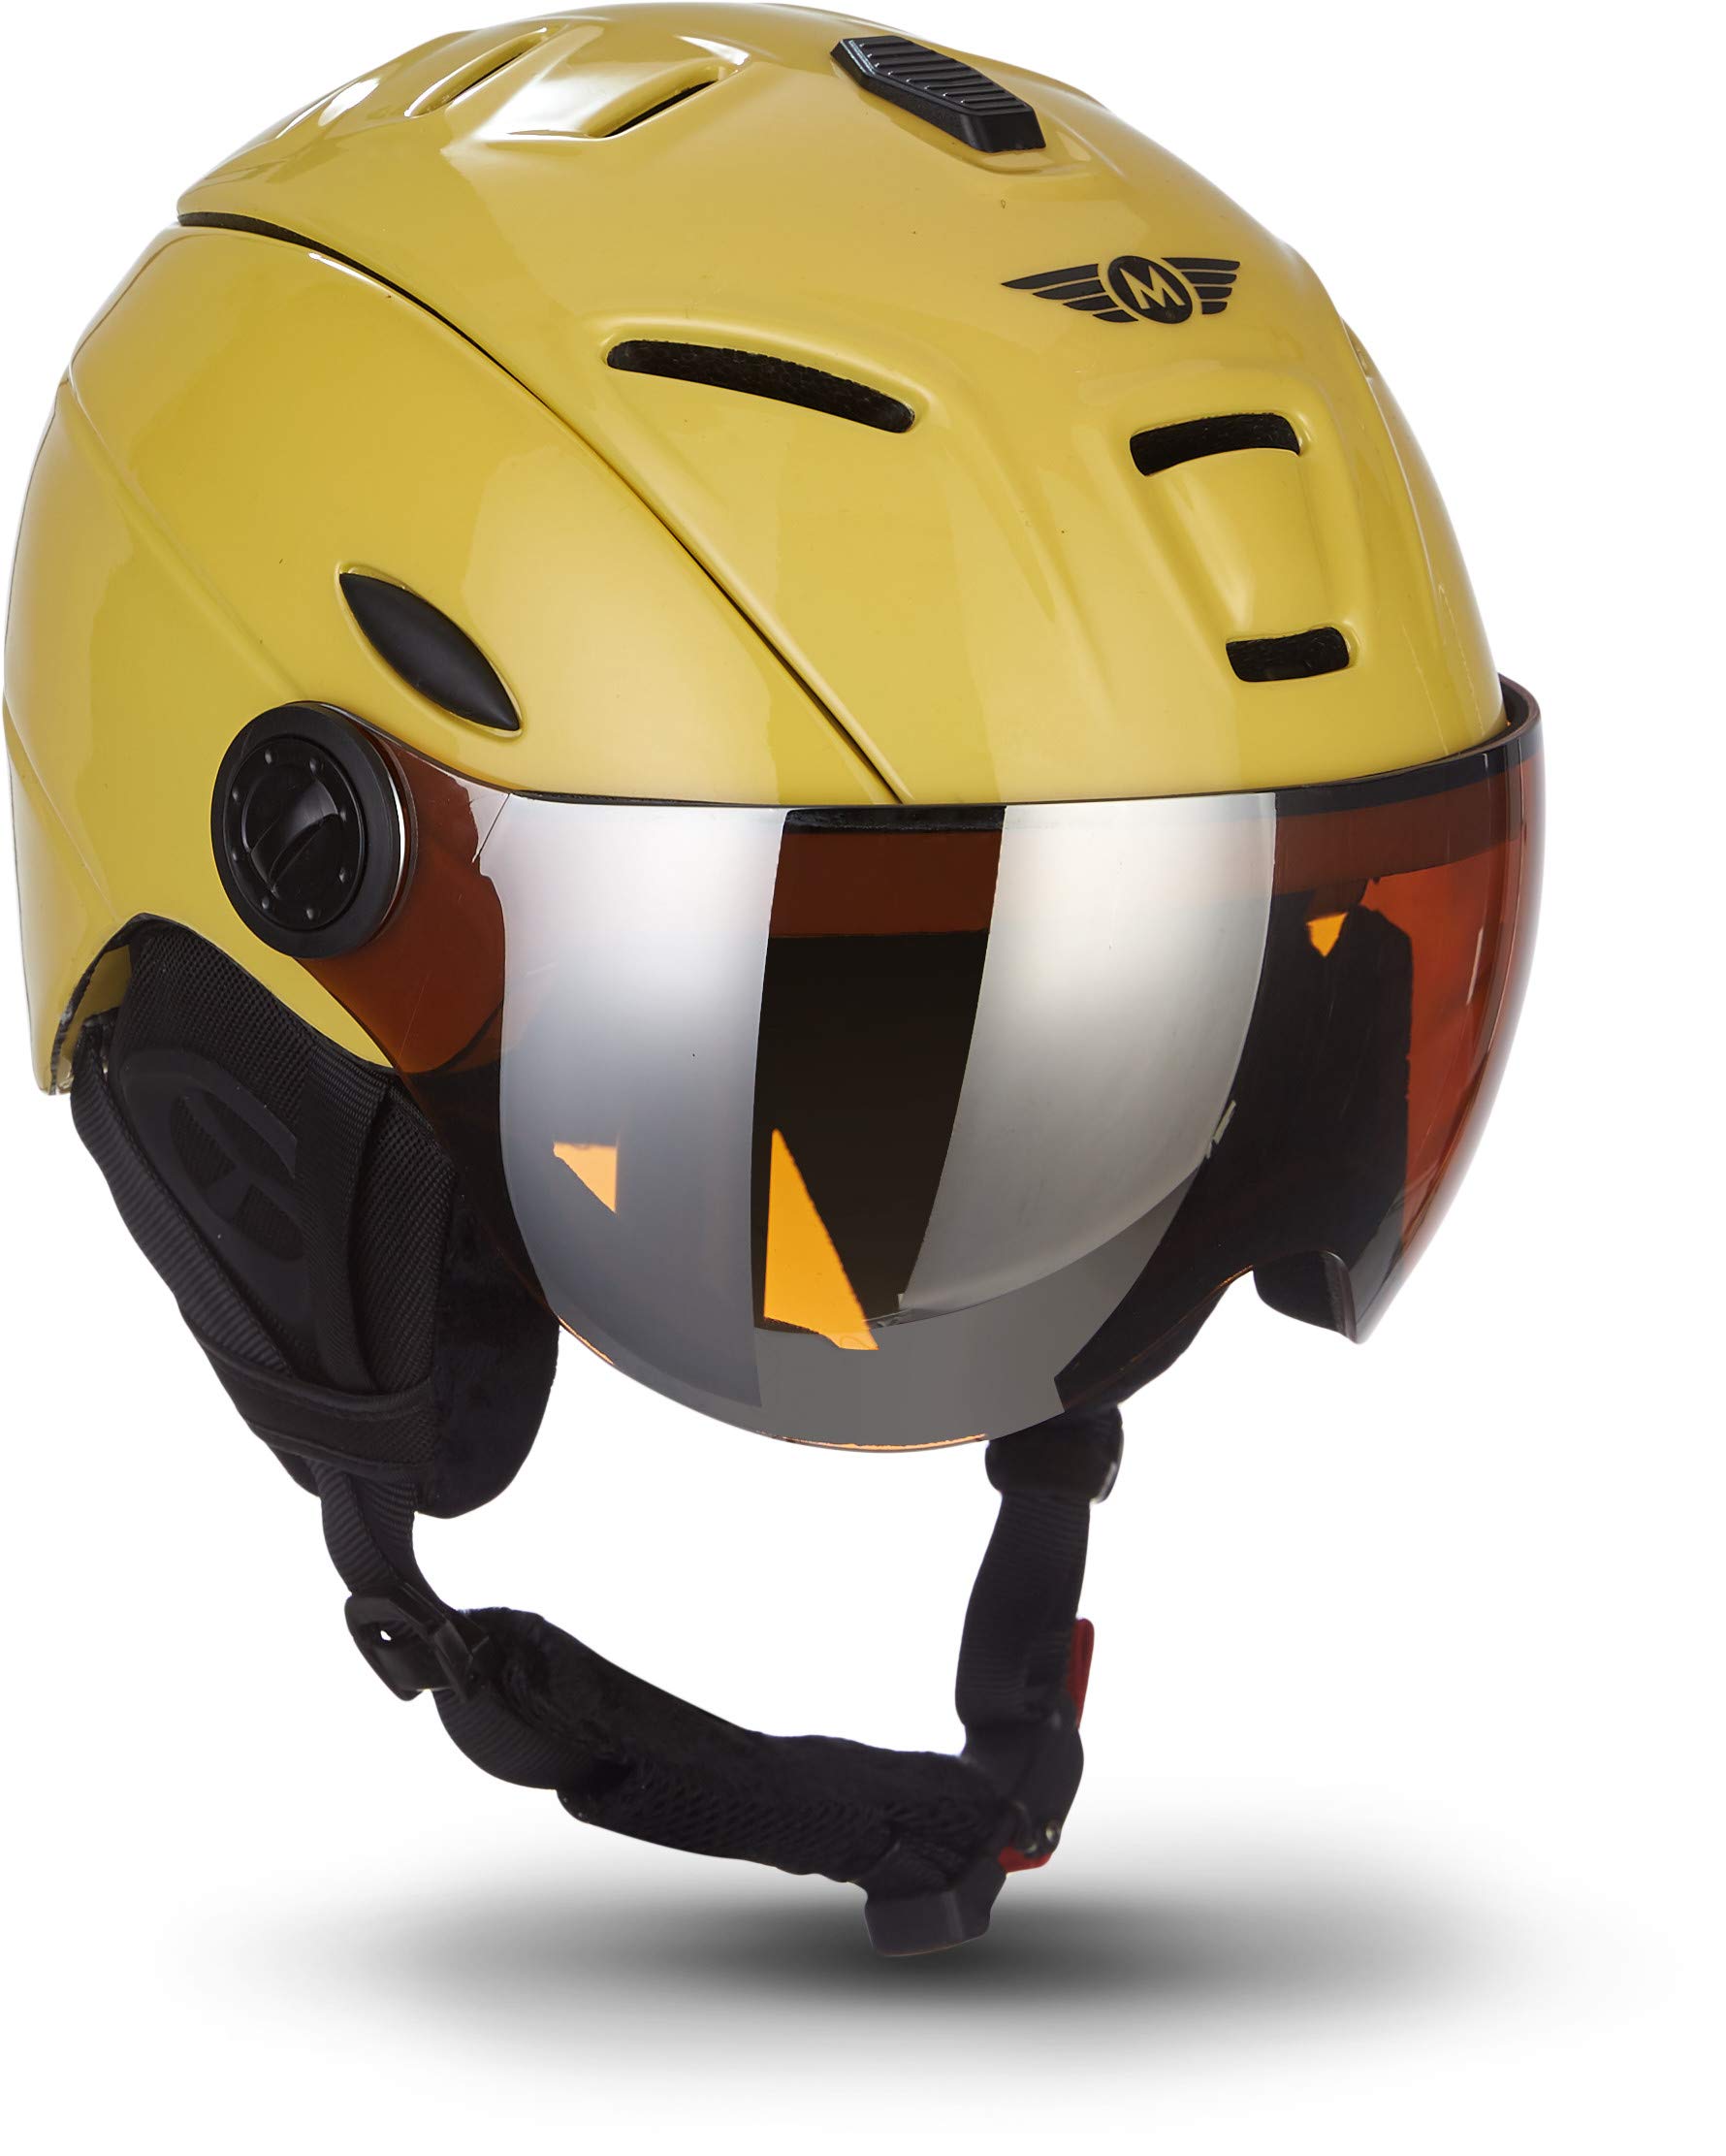 MOTO Helmets K96 · Ski-Helm Snowboard · Damen & Herren · EN-1077 Zertifiziert (Creme, M (55-58cm)) von Moto Helmets